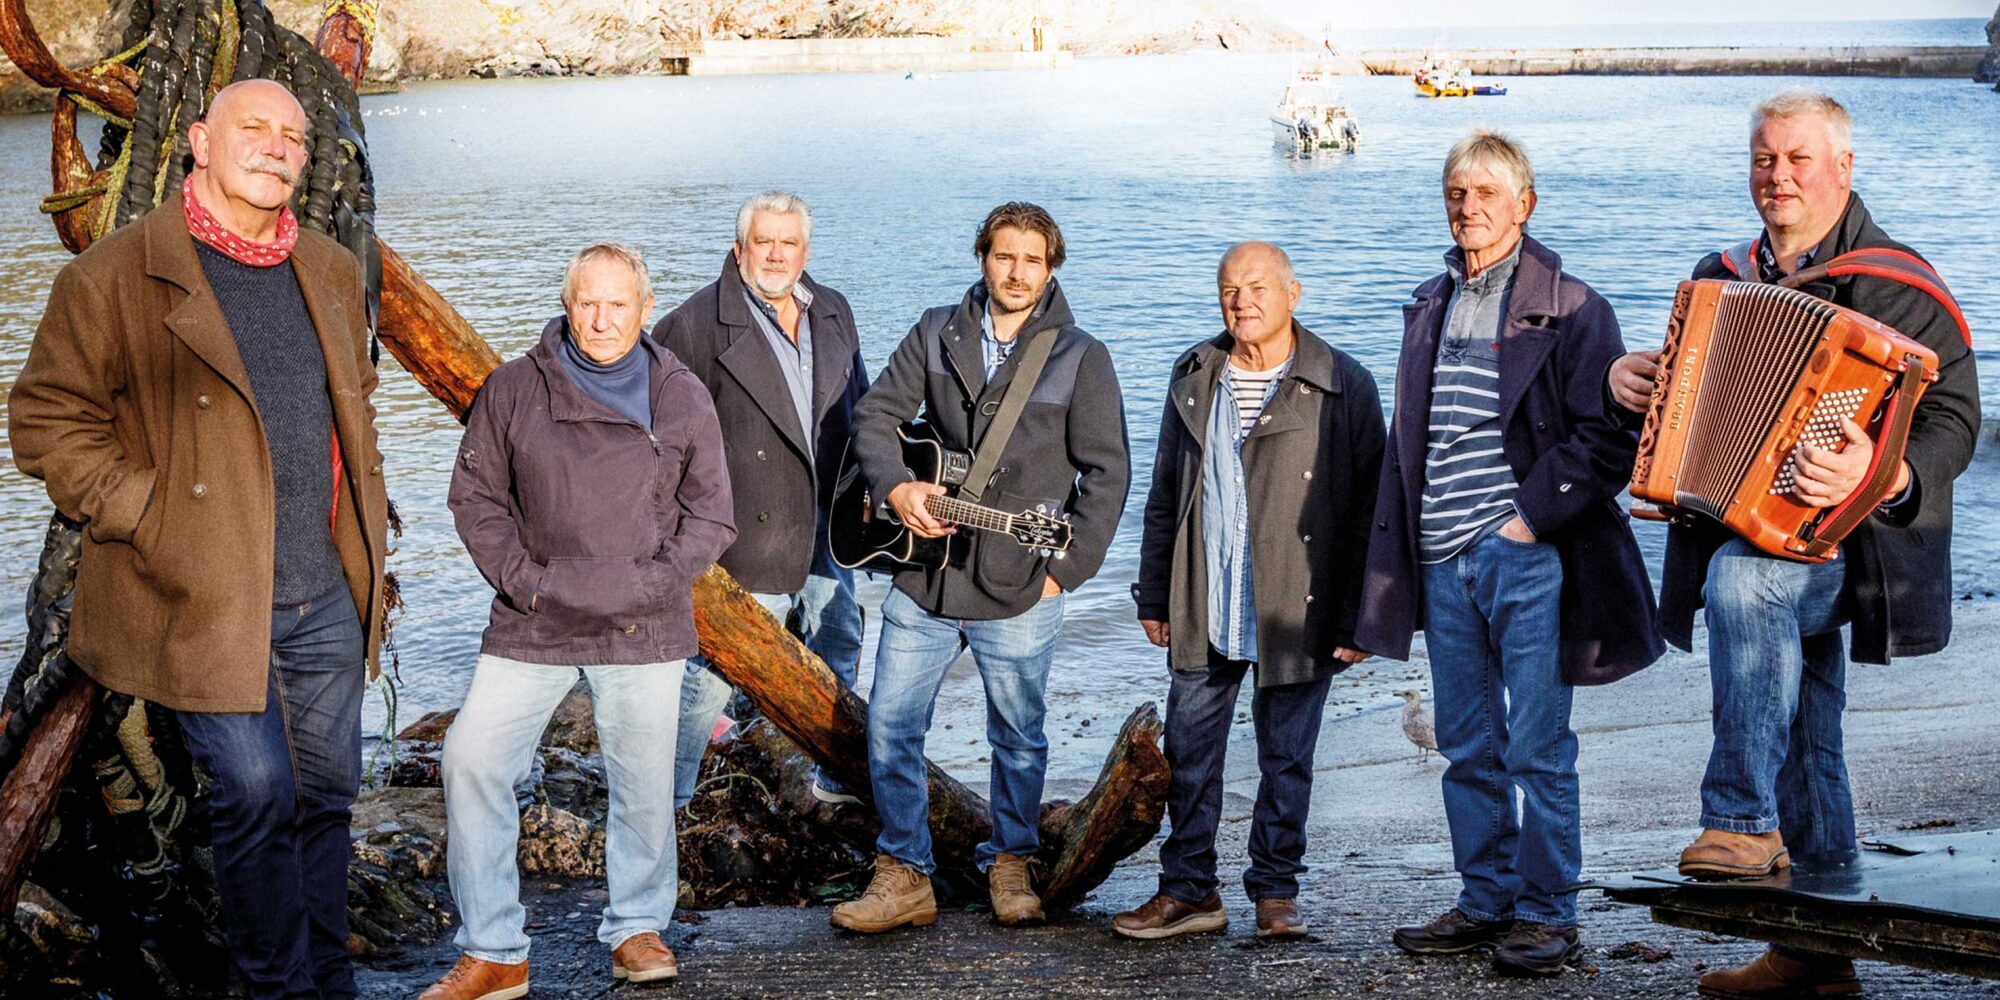 Fisherman's Friends: Rock The Boat Tour